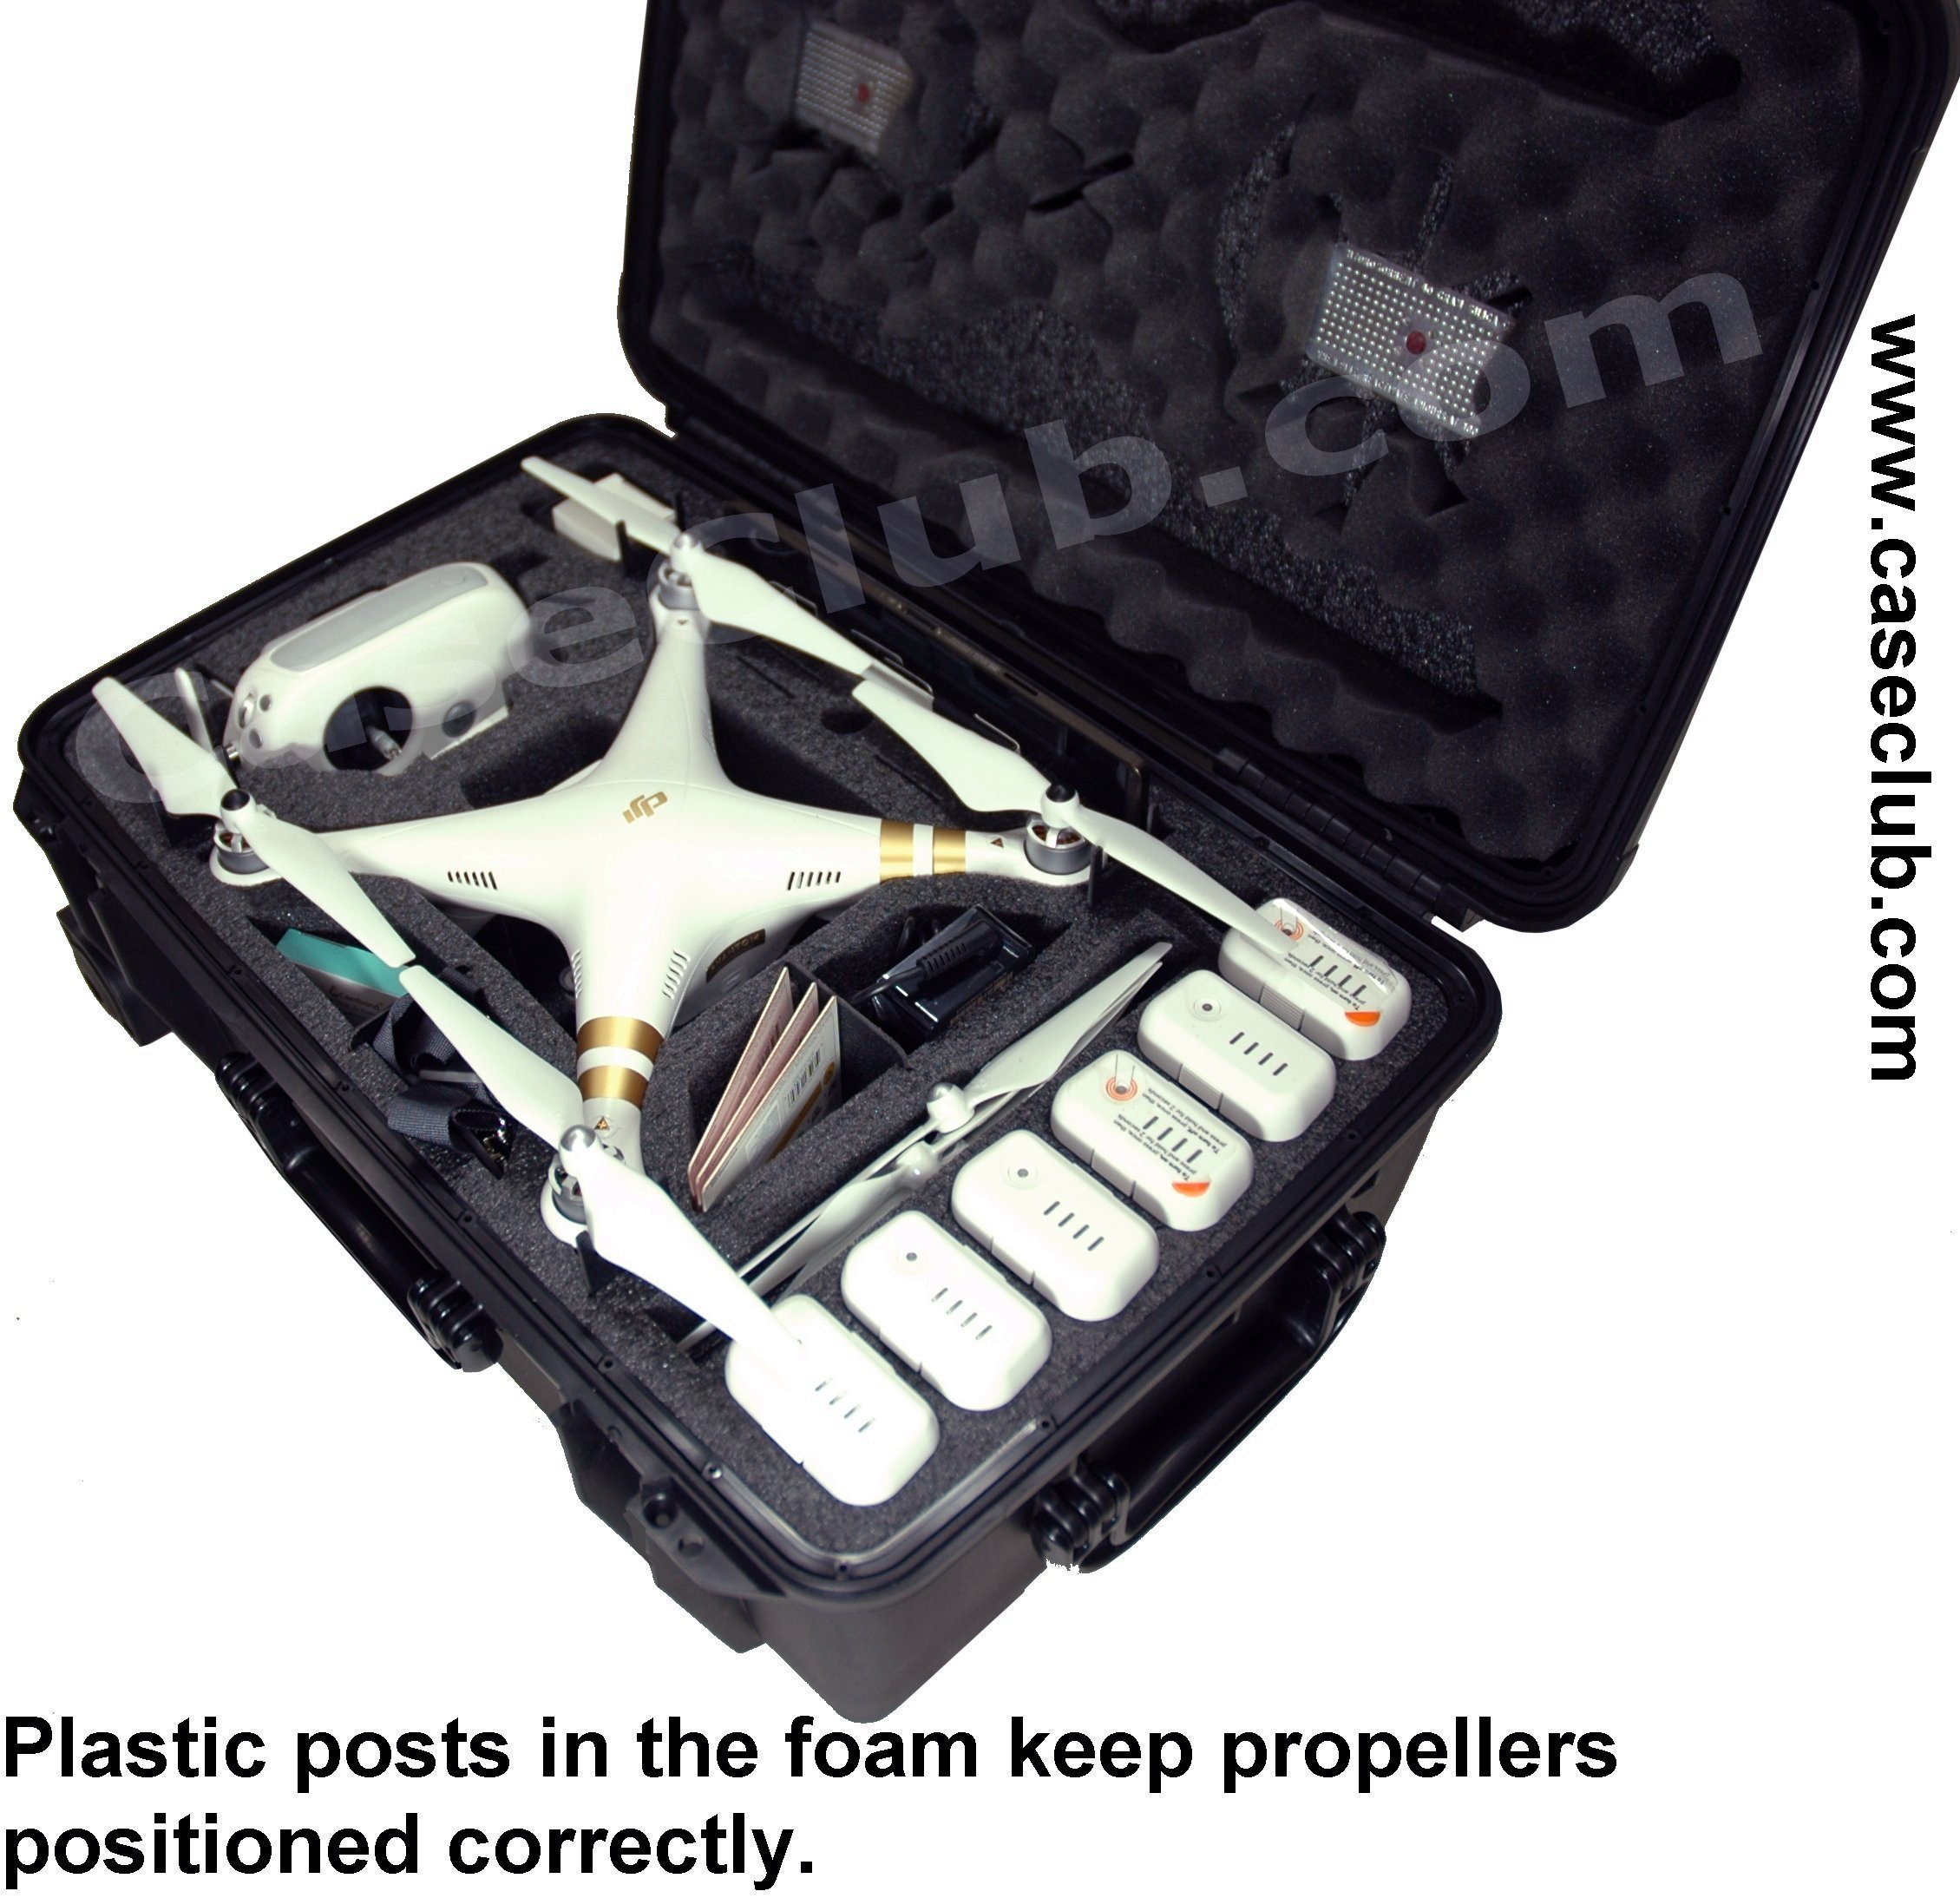 Case Club DJI Phantom 4 Waterproof Compact Drone Built In Locking Latches 433203 